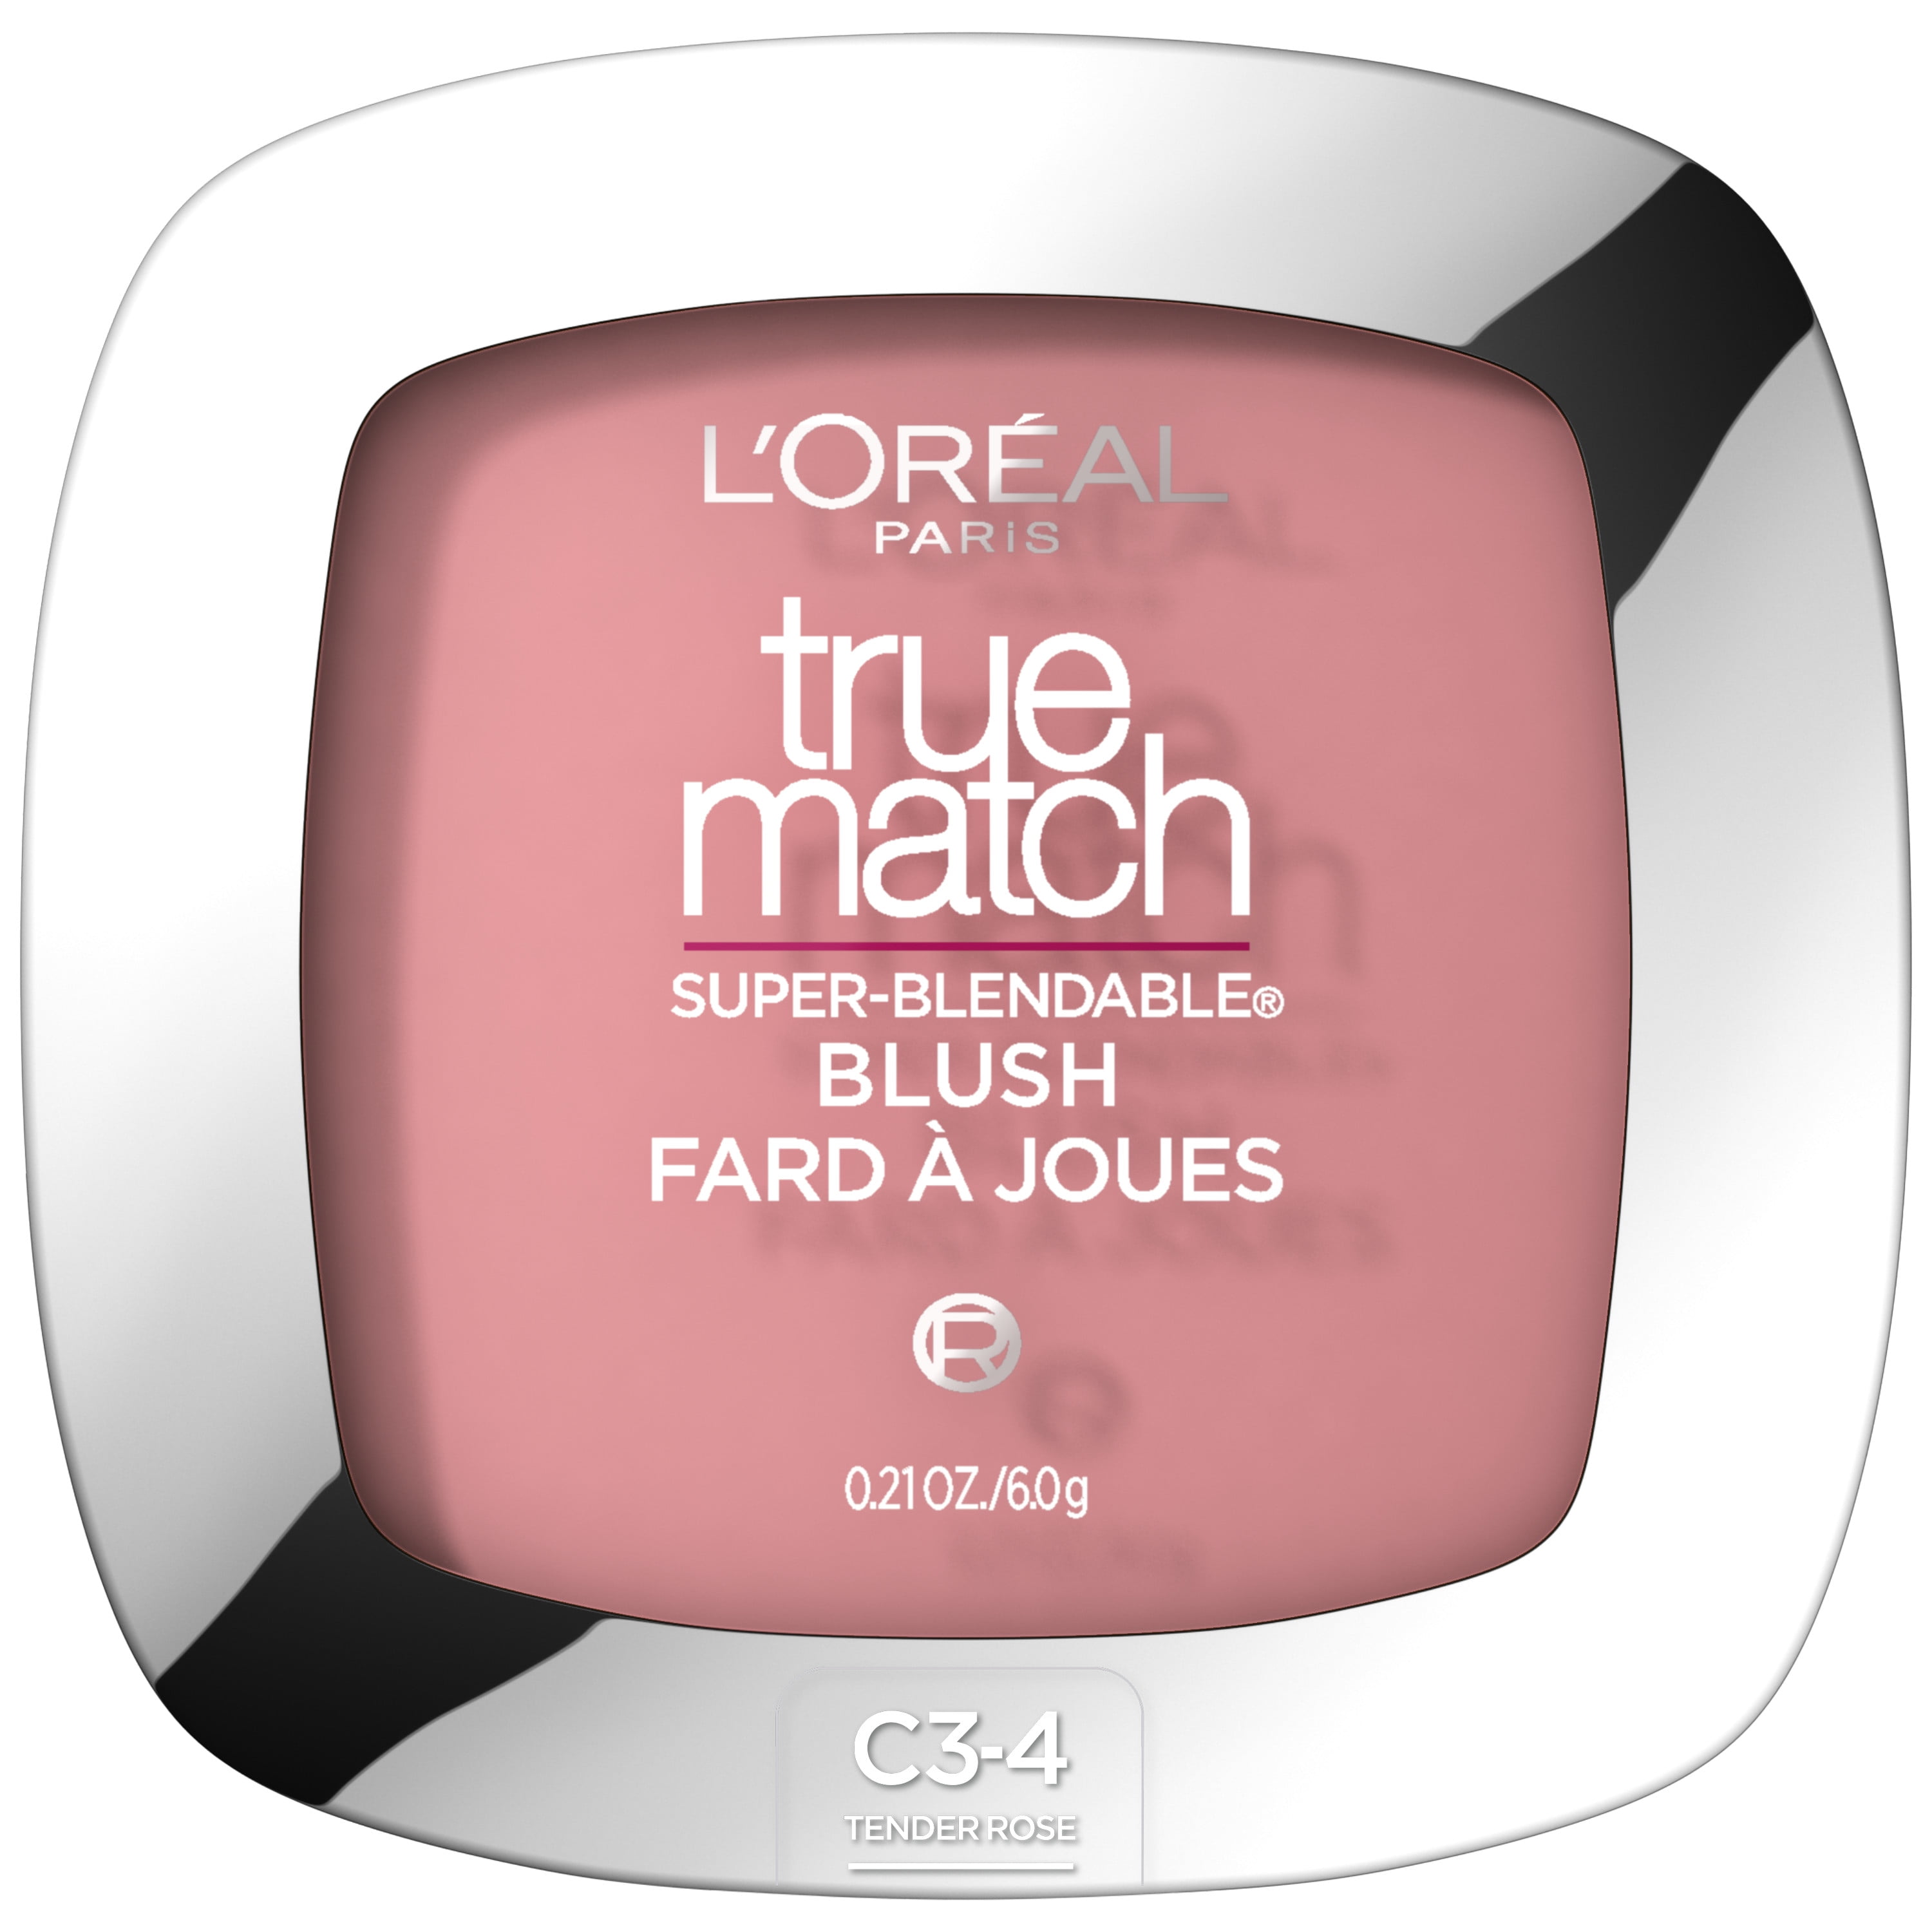 Loreal True Match Blush, Tender Rose C3-4 - 0.21 oz